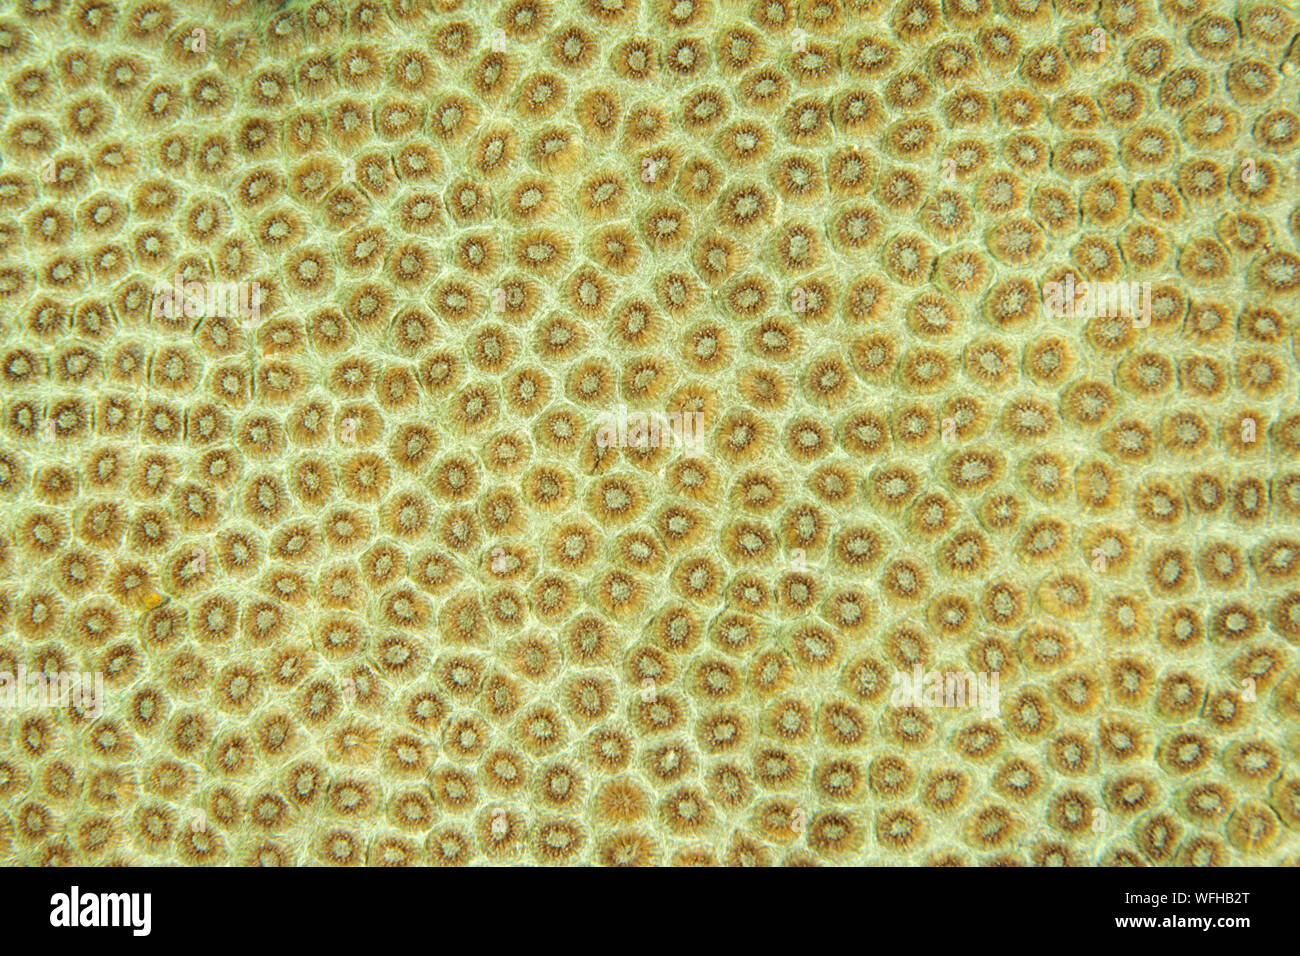 Closeup of hard coral, Favia stelligera, Raja Ampat Indonesia. Stock Photo